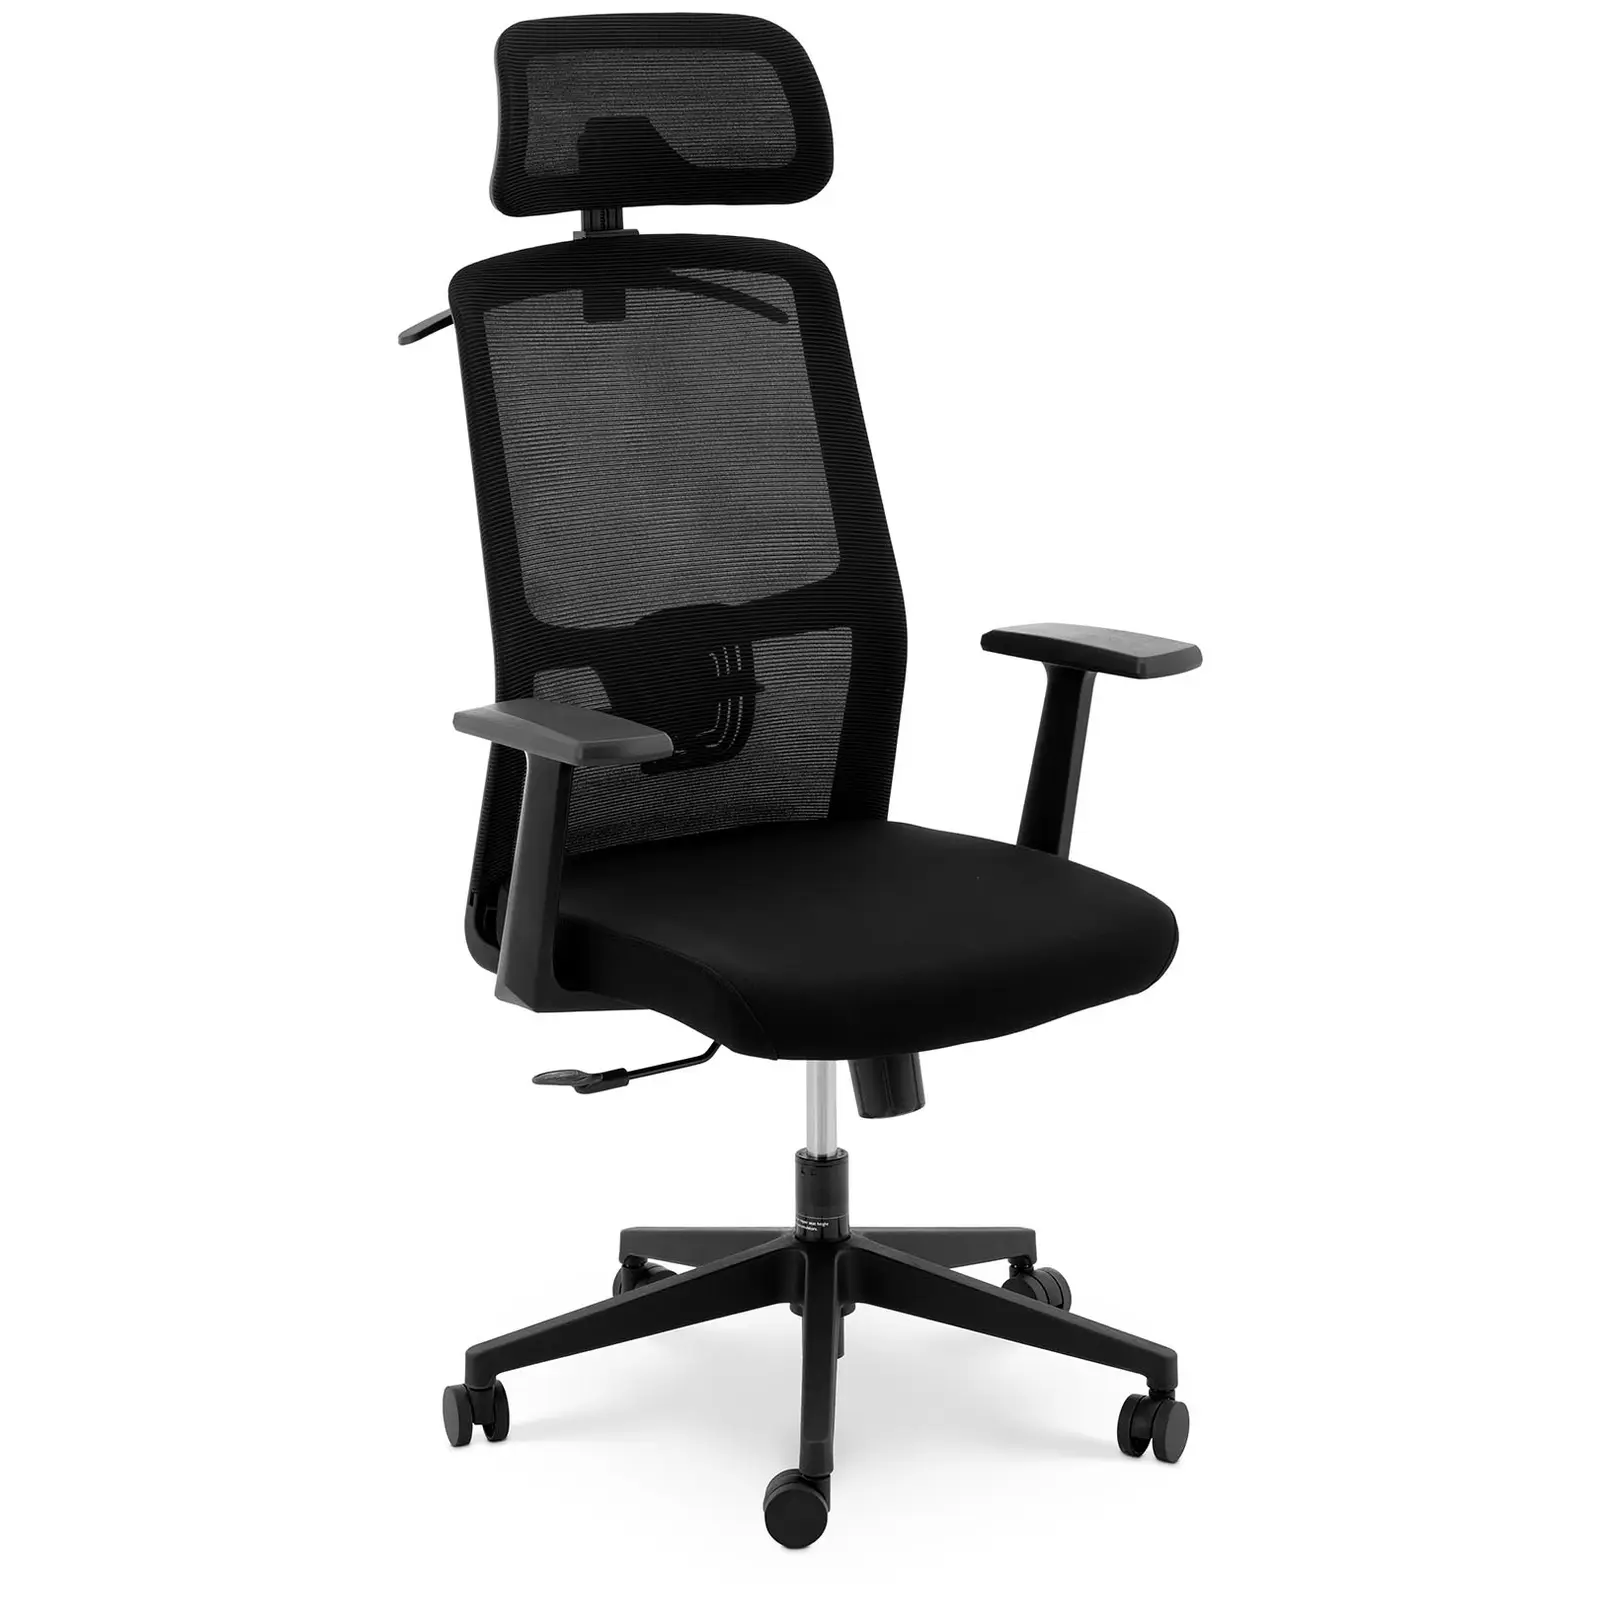 Silla de escritorio - respaldo de red - reposacabezas - asiento de 50 x 50,5 cm - hasta 150 kg - negra